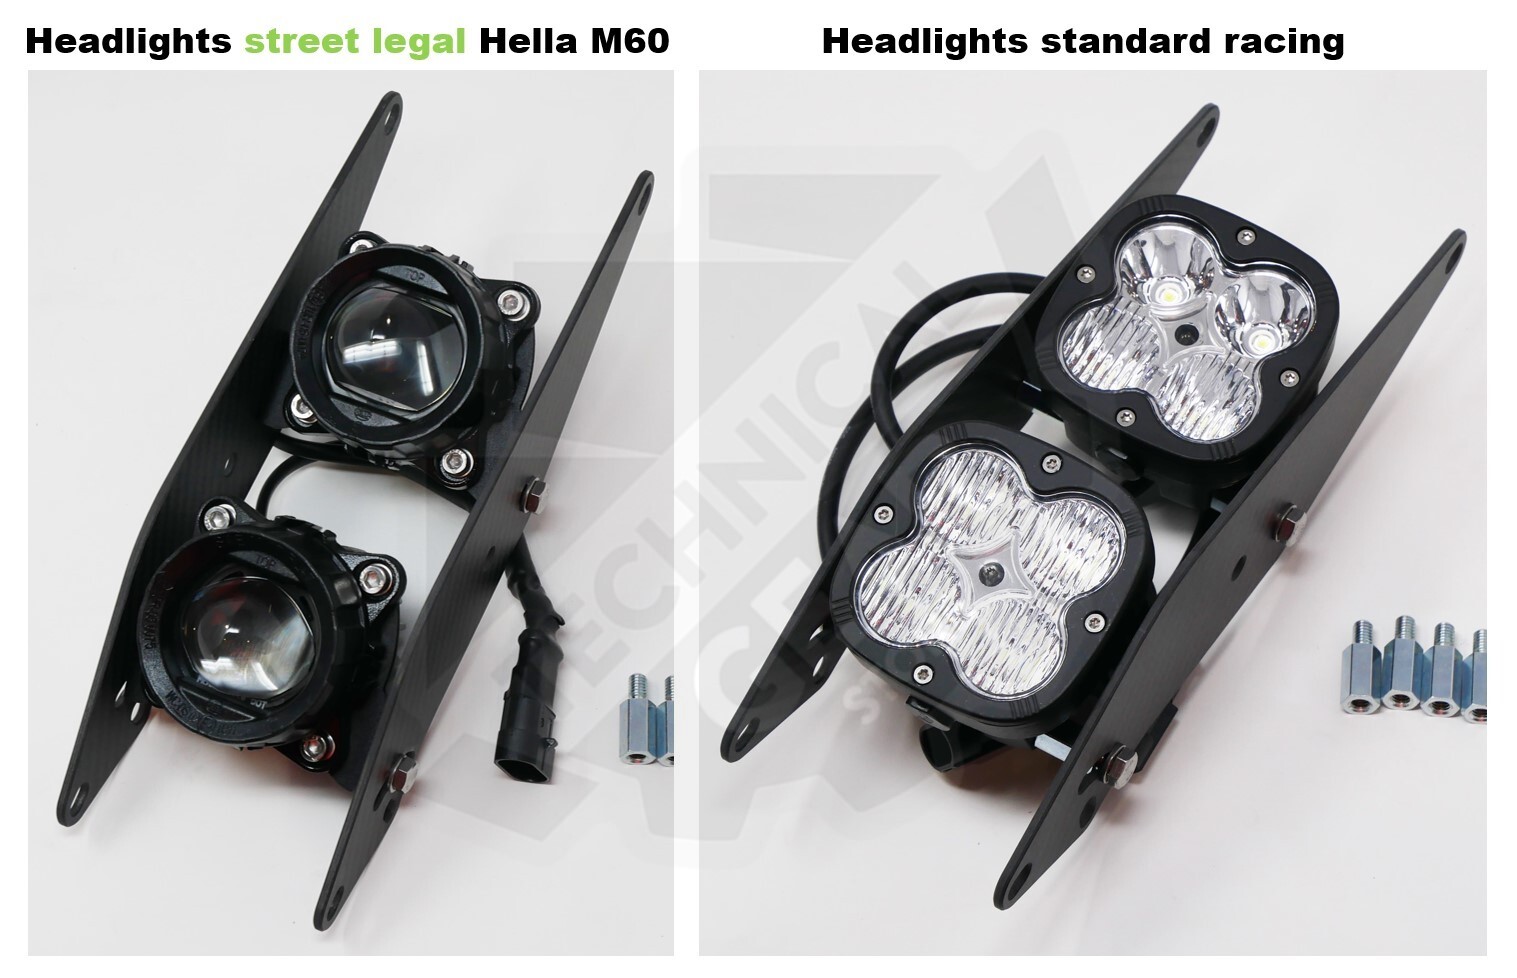 Hella LED M60 Rally Highlights 2020 street legal High Beam